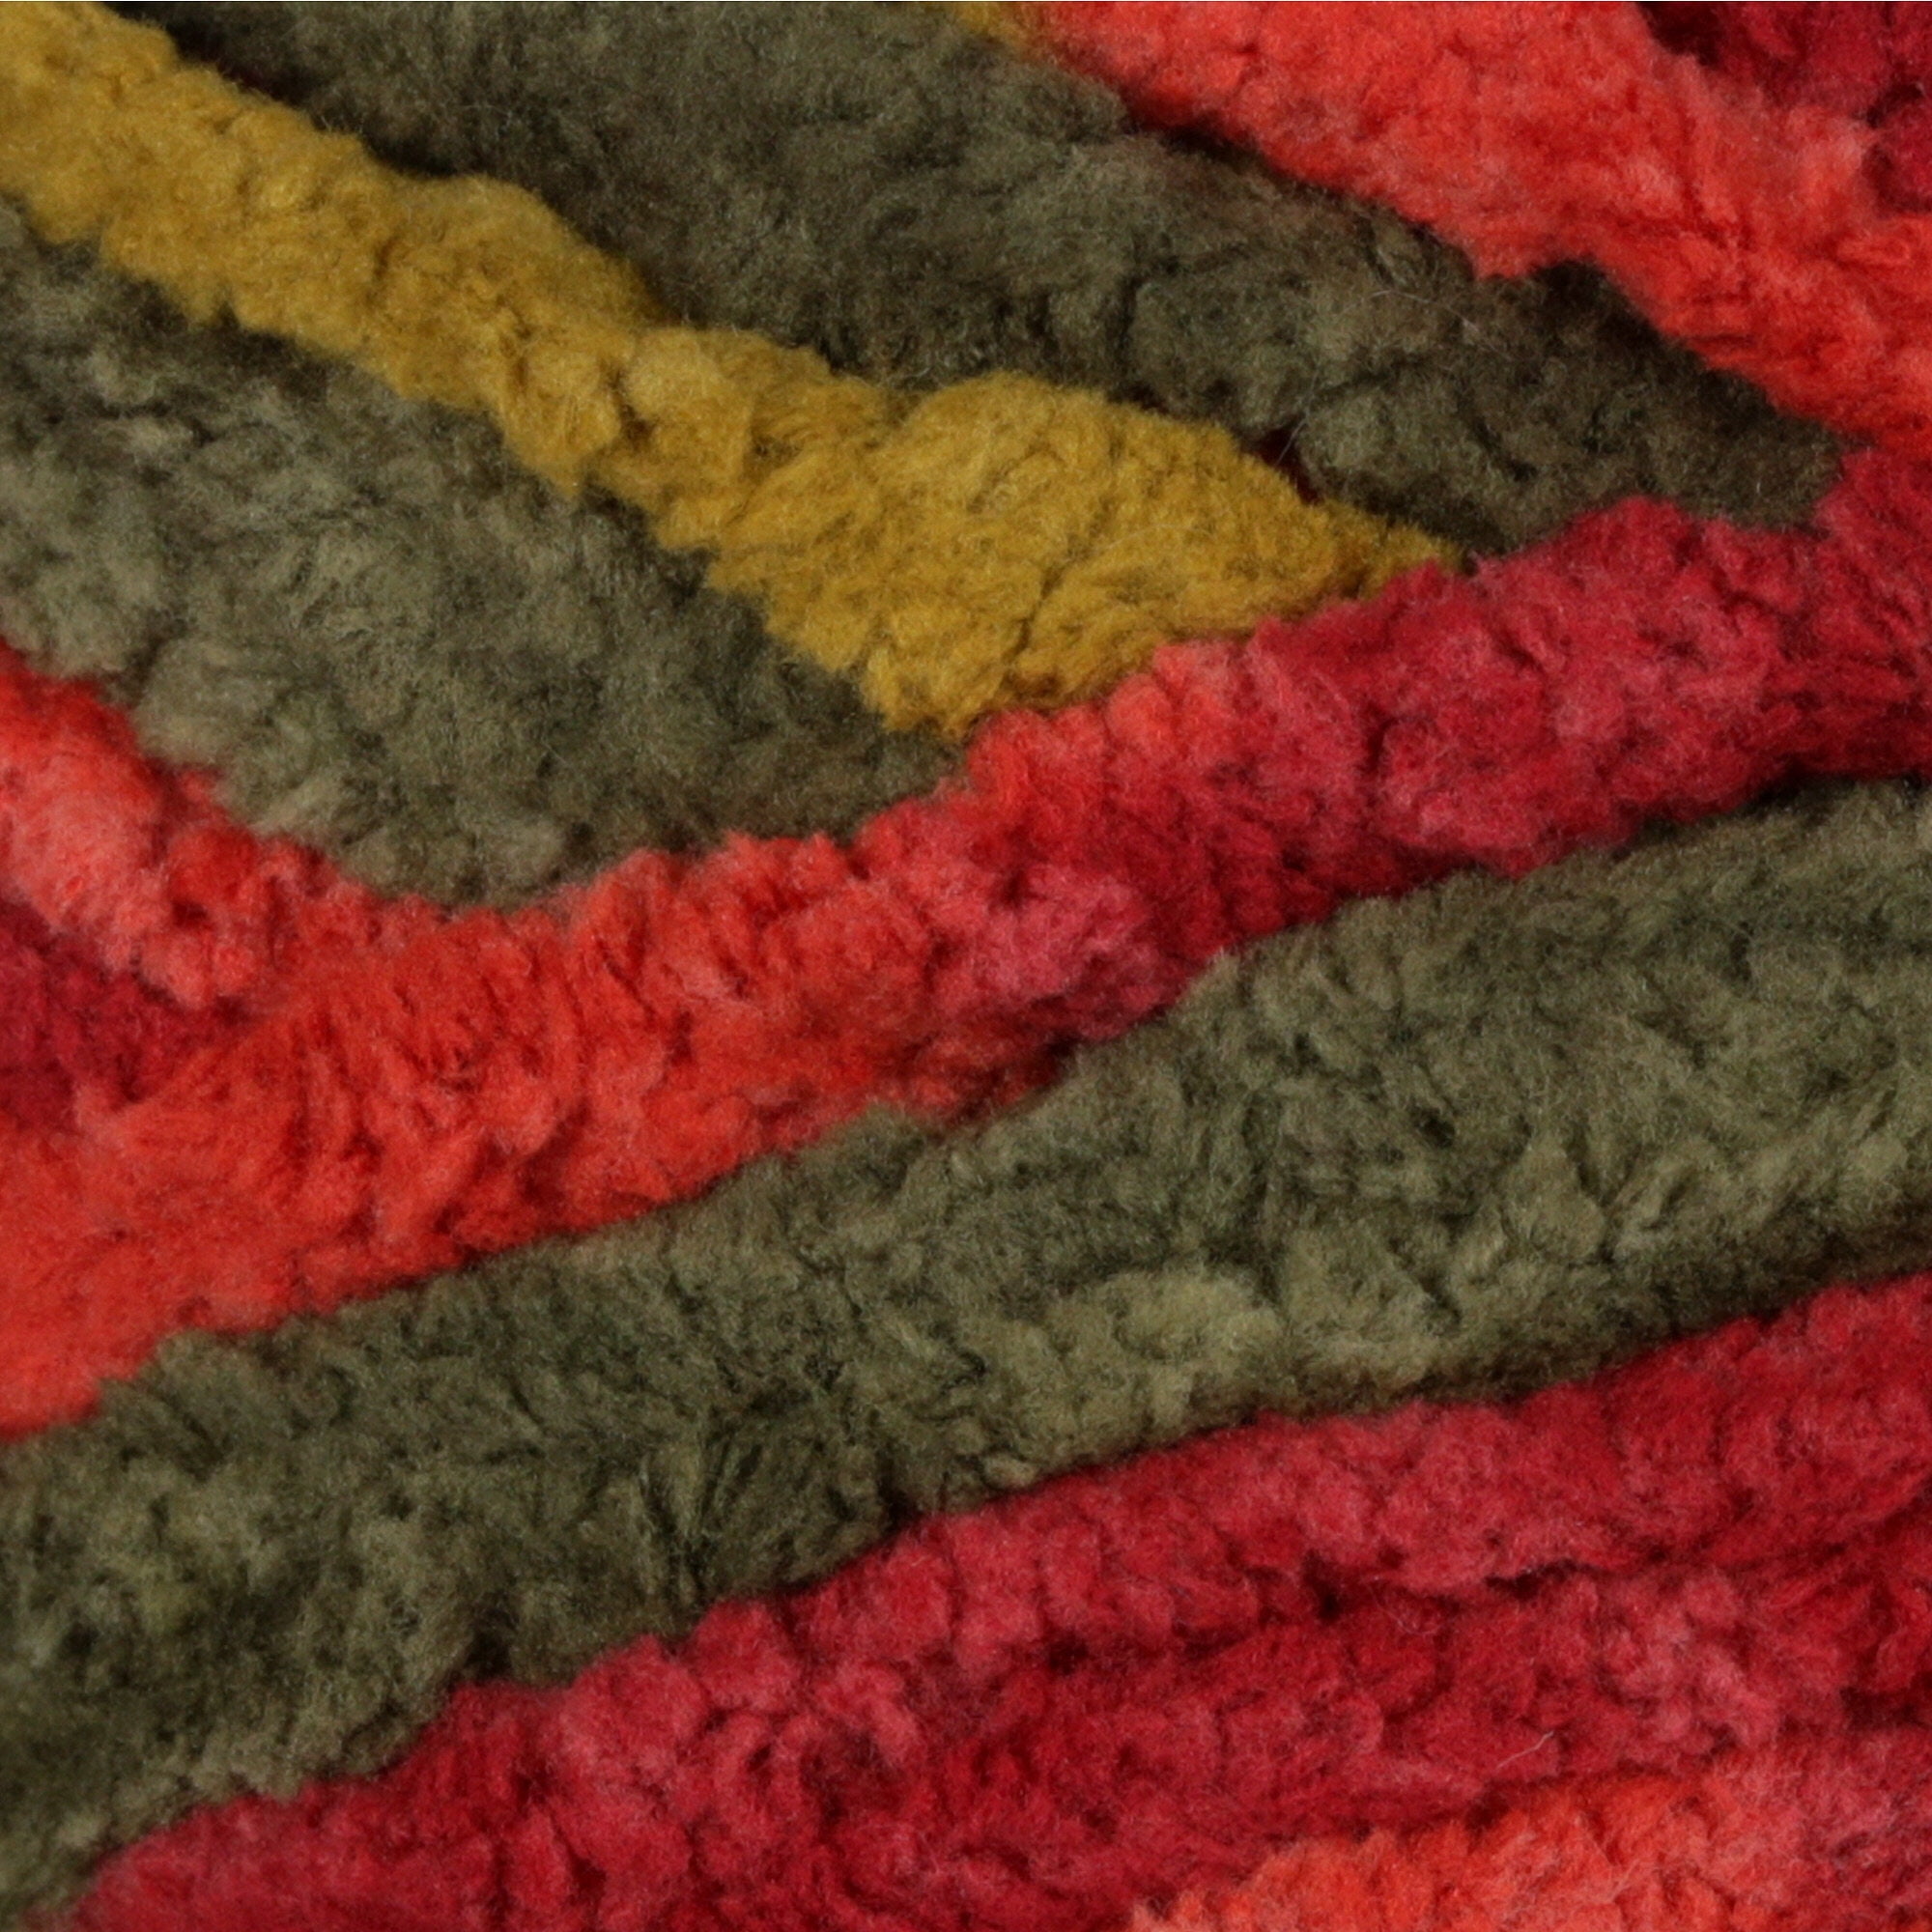 Bernat Blanket Yarn - Harvest, 5.3 oz - Foods Co.